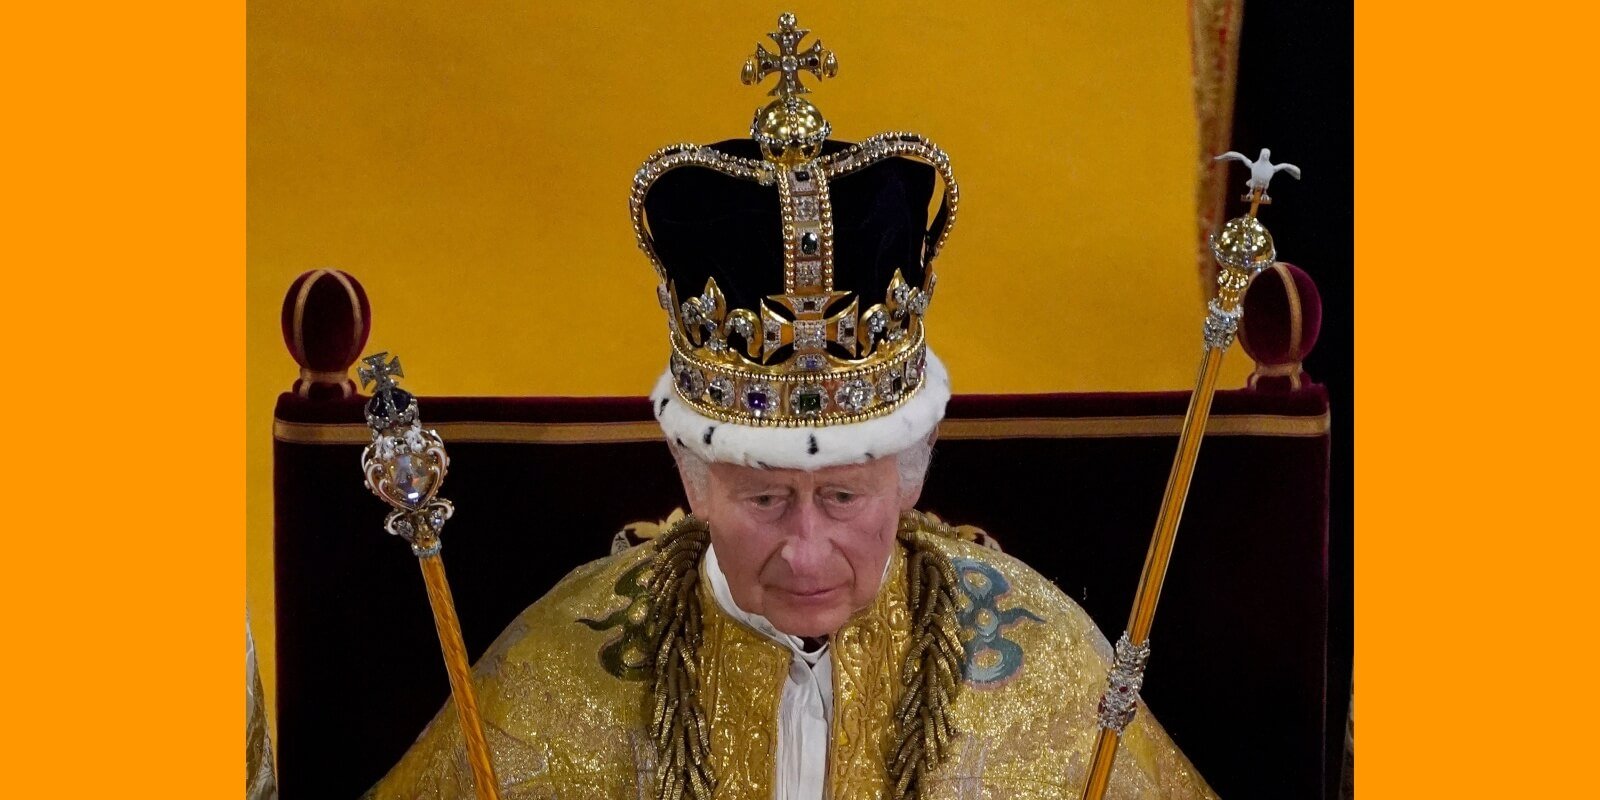 King Charles wearing St Edwards crown at his coronation.